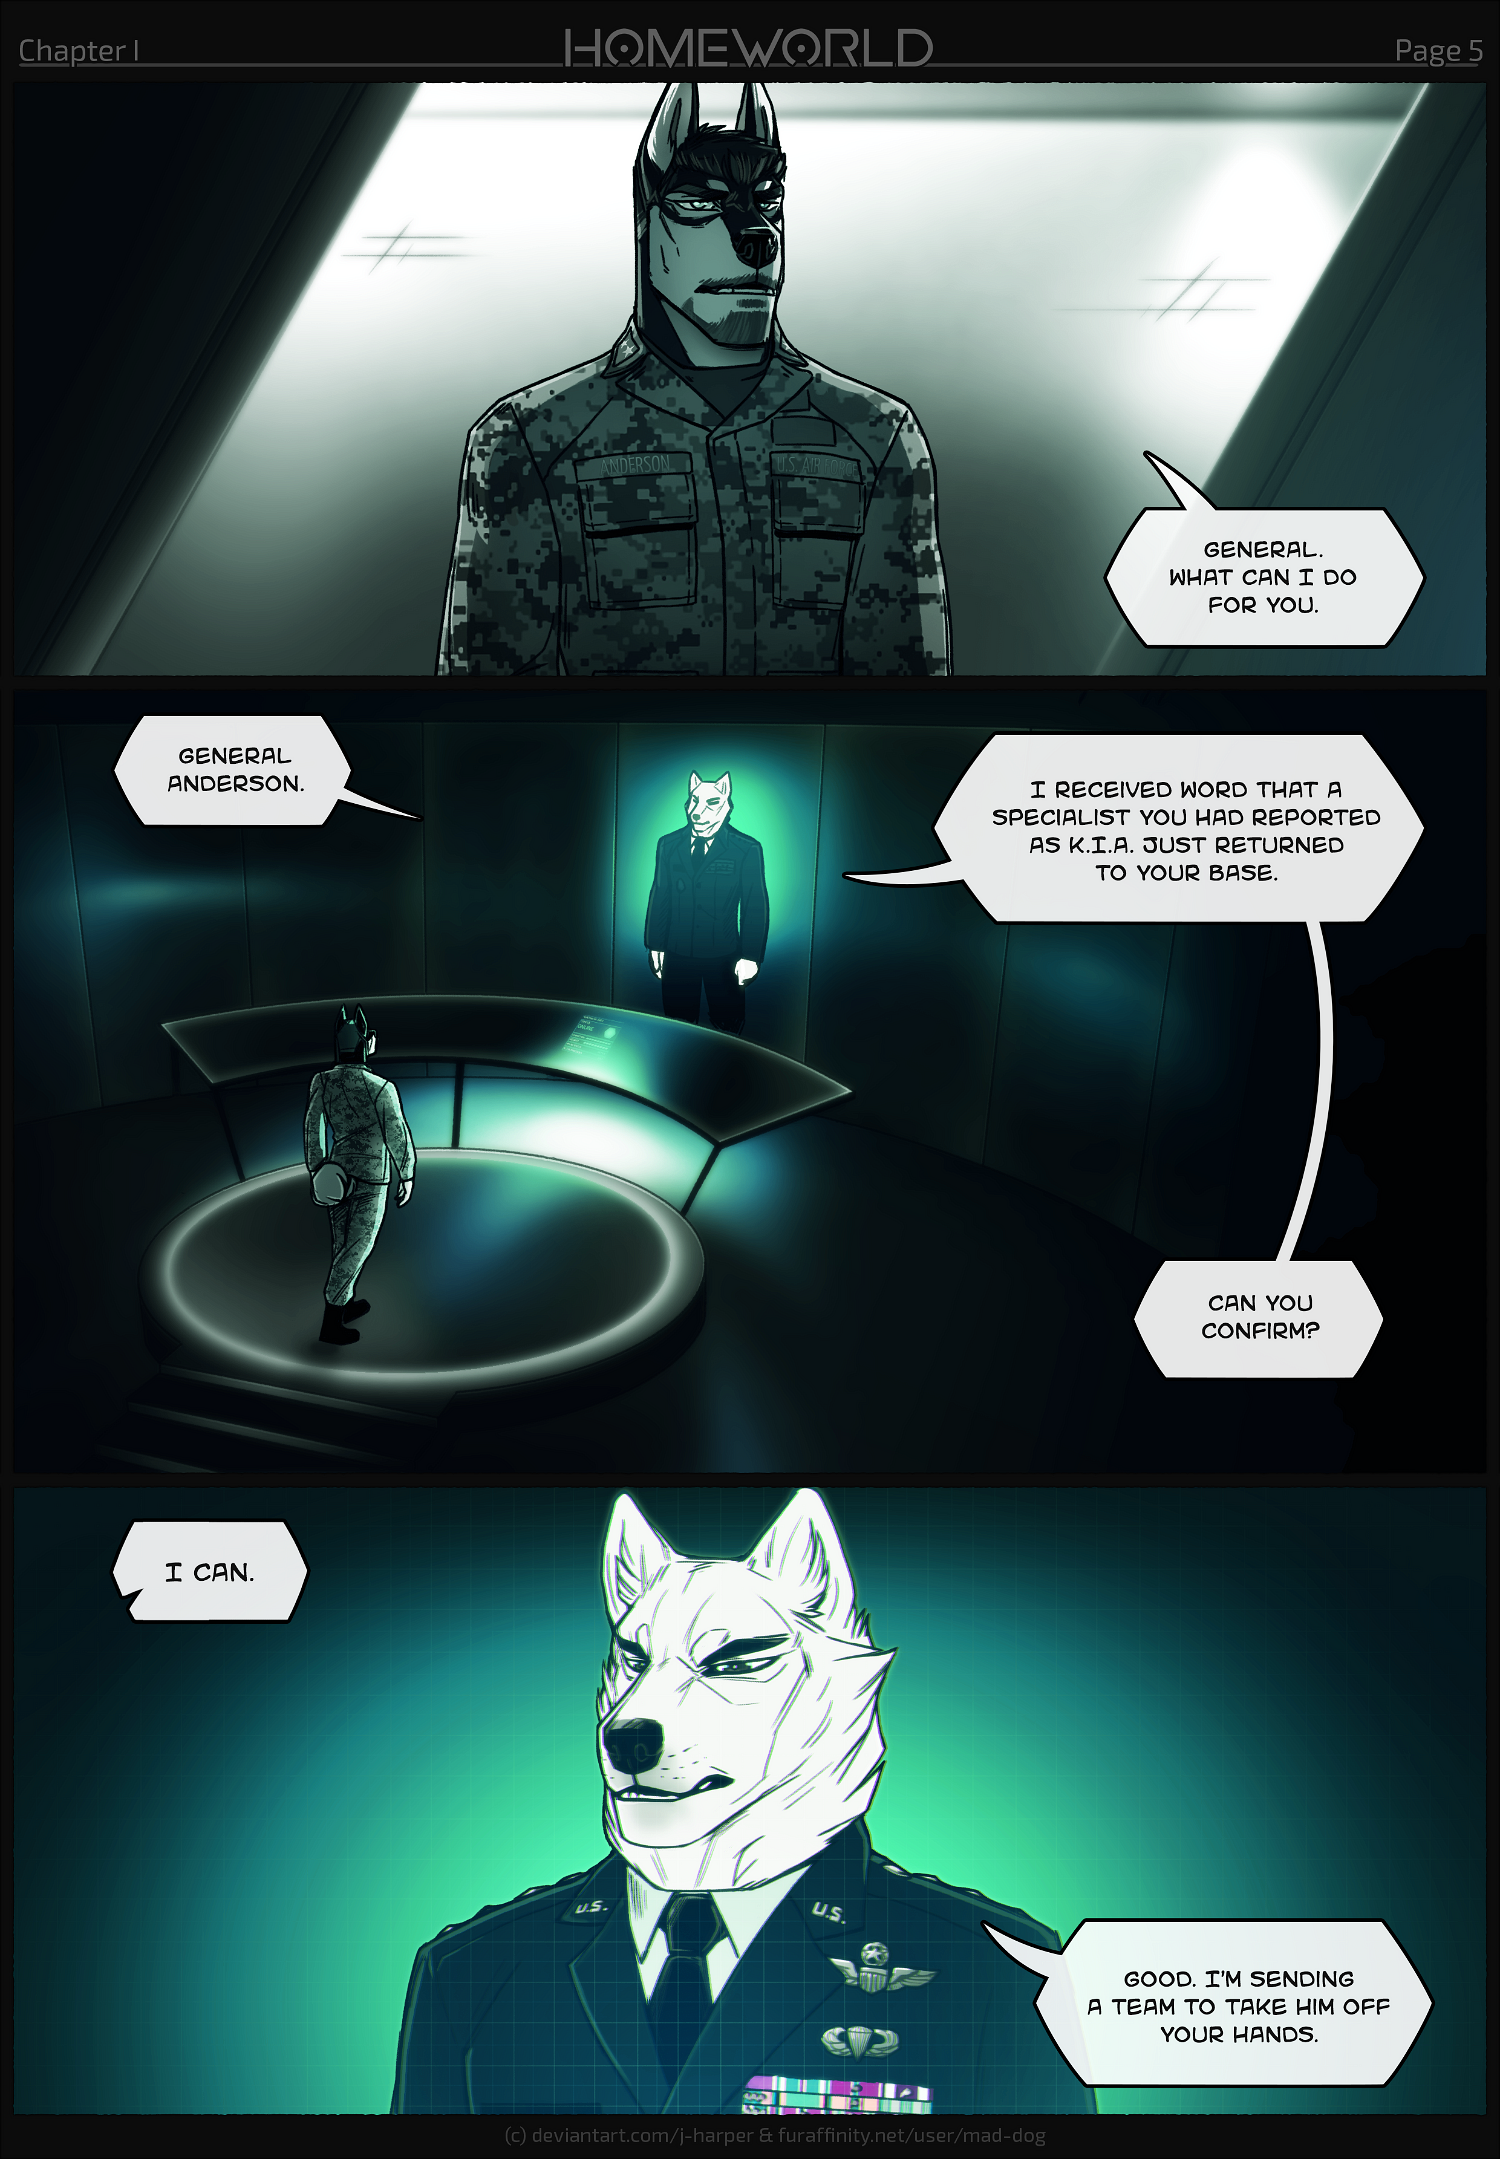 HOMEWORLD Chapter I Page 5 by Mad-dog -- Fur Affinity [dot] net